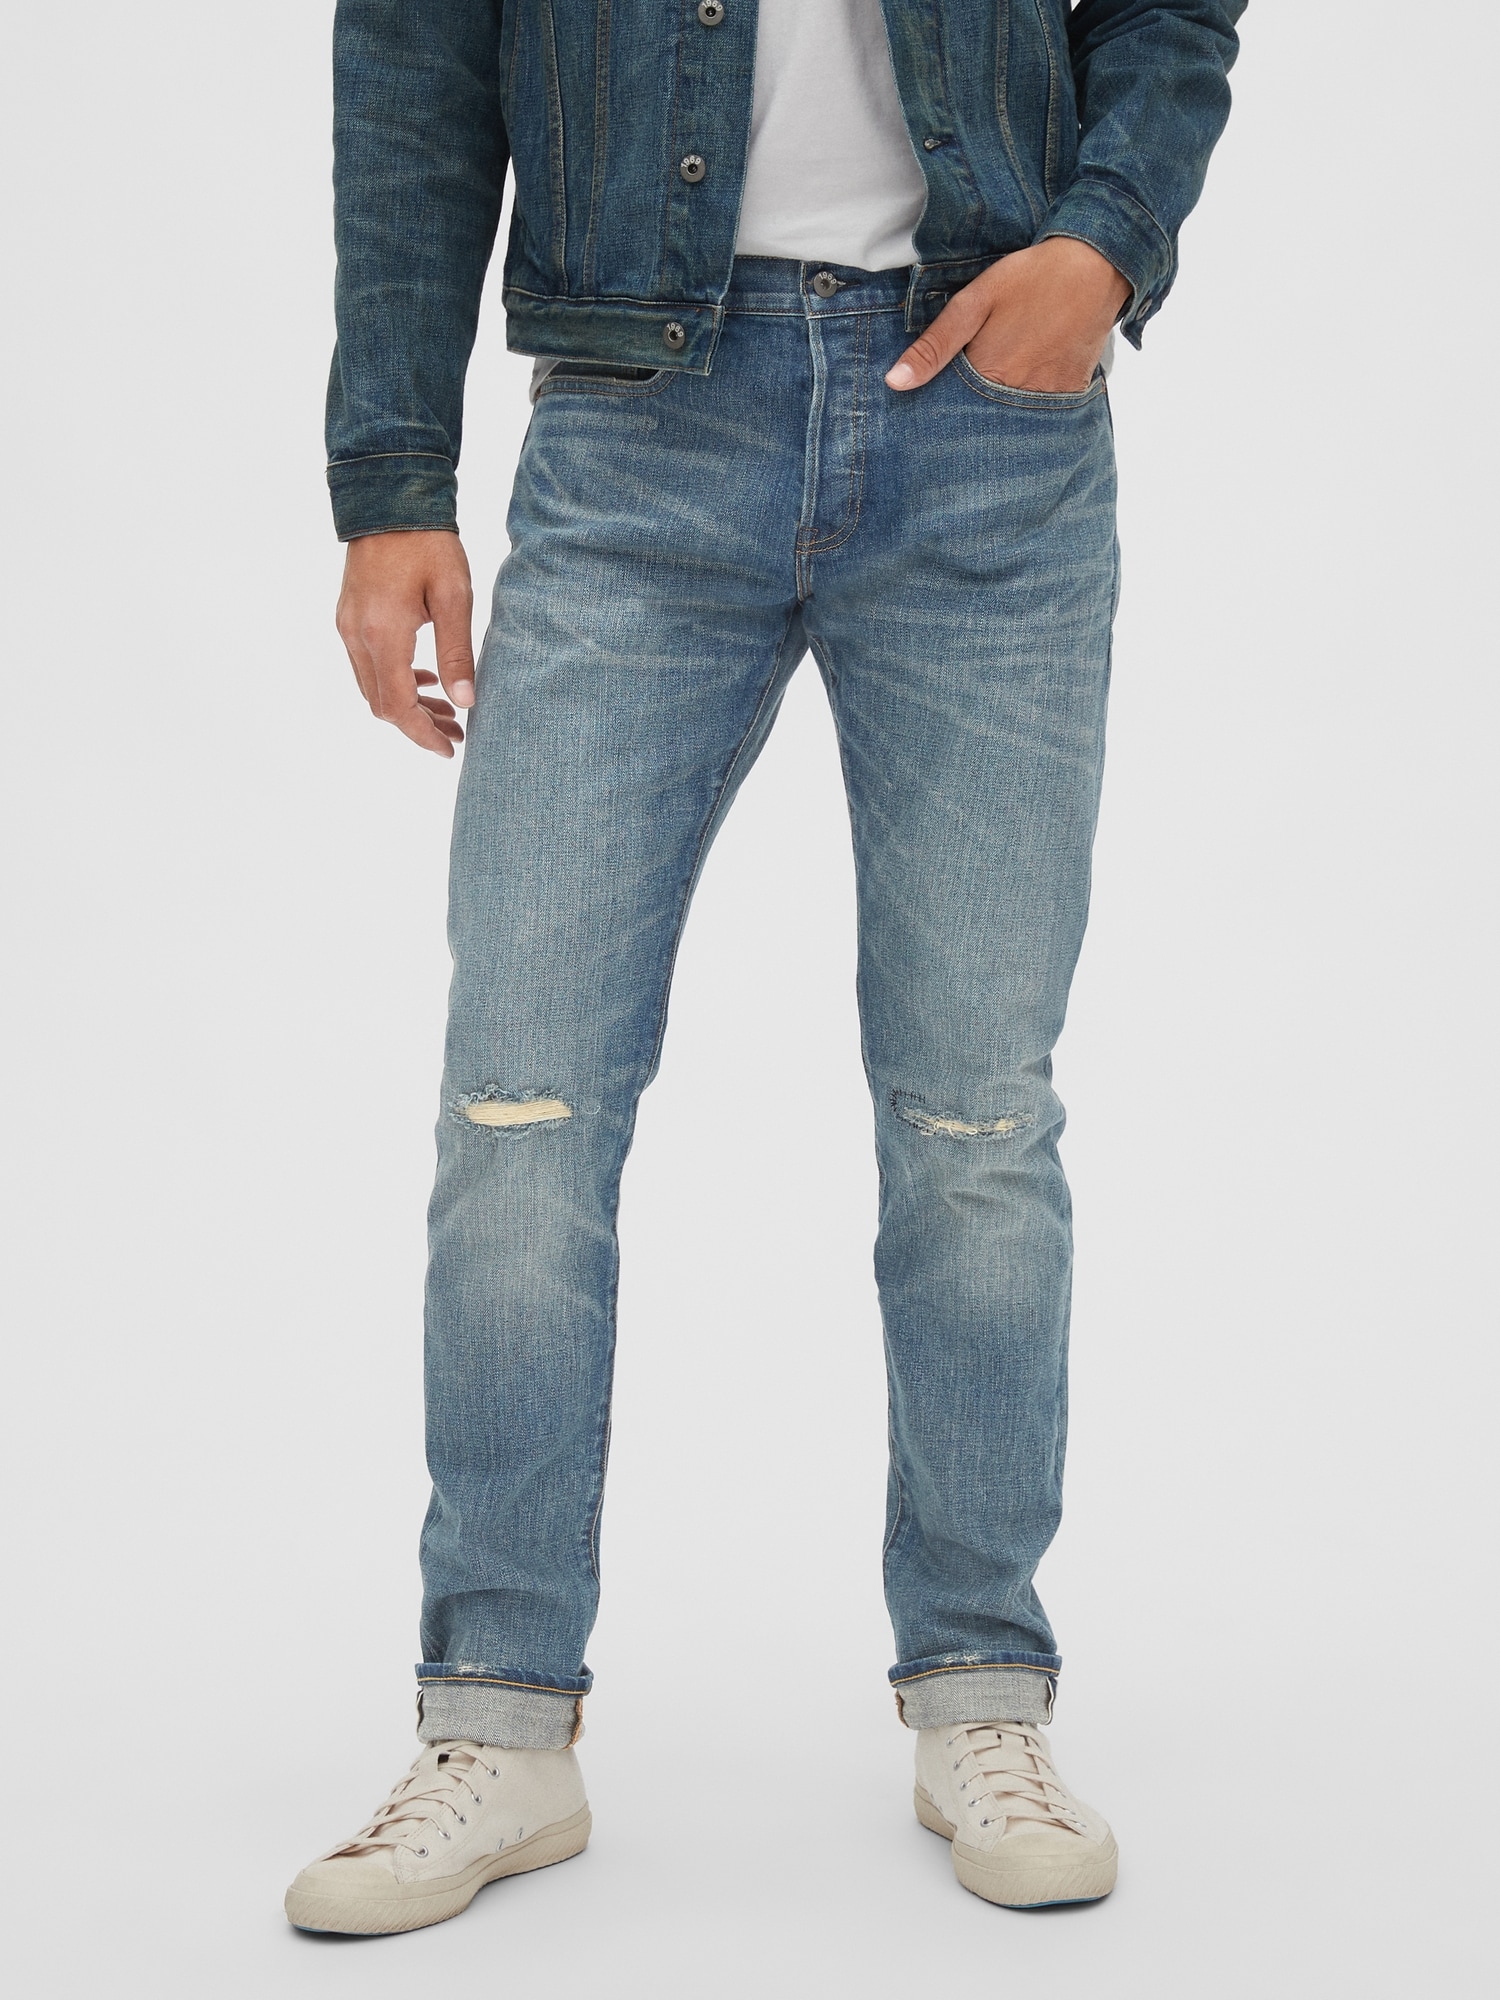 gap 1969 selvedge jeans